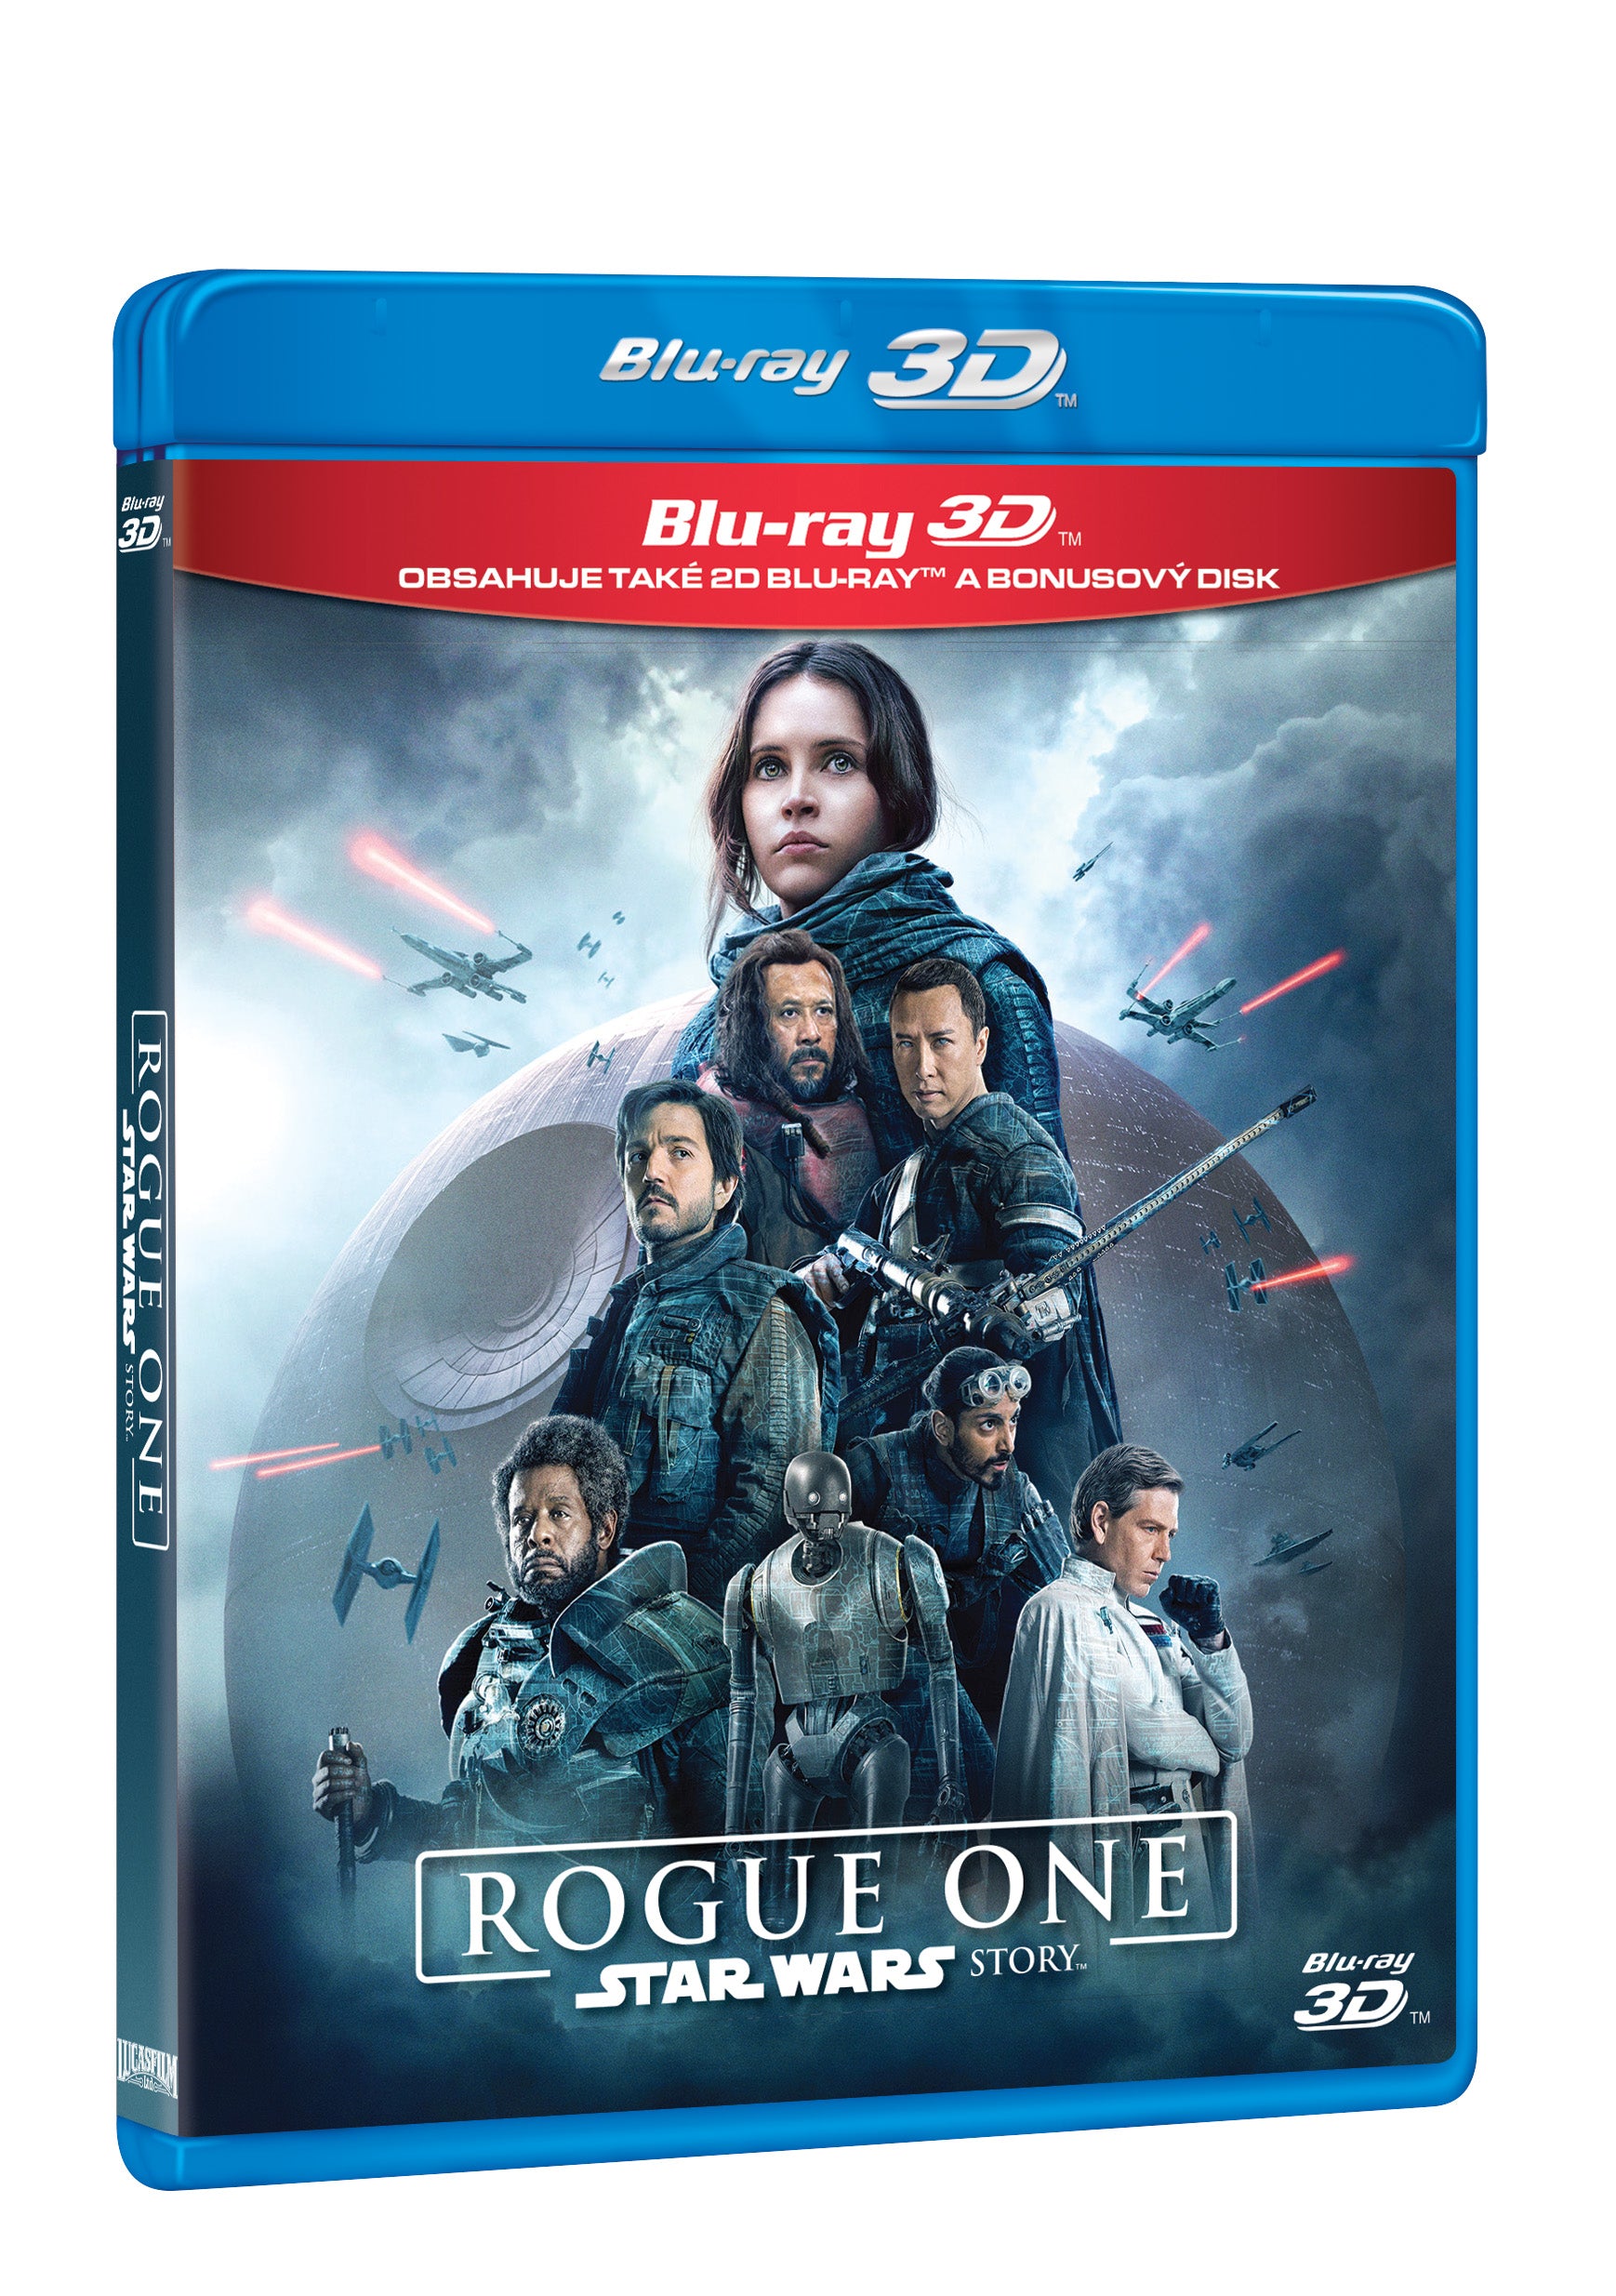 Rogue One: Star Wars Story 3BD (3D+2D+bonus disk) / Rogue One: Star Wars Story - Czech version